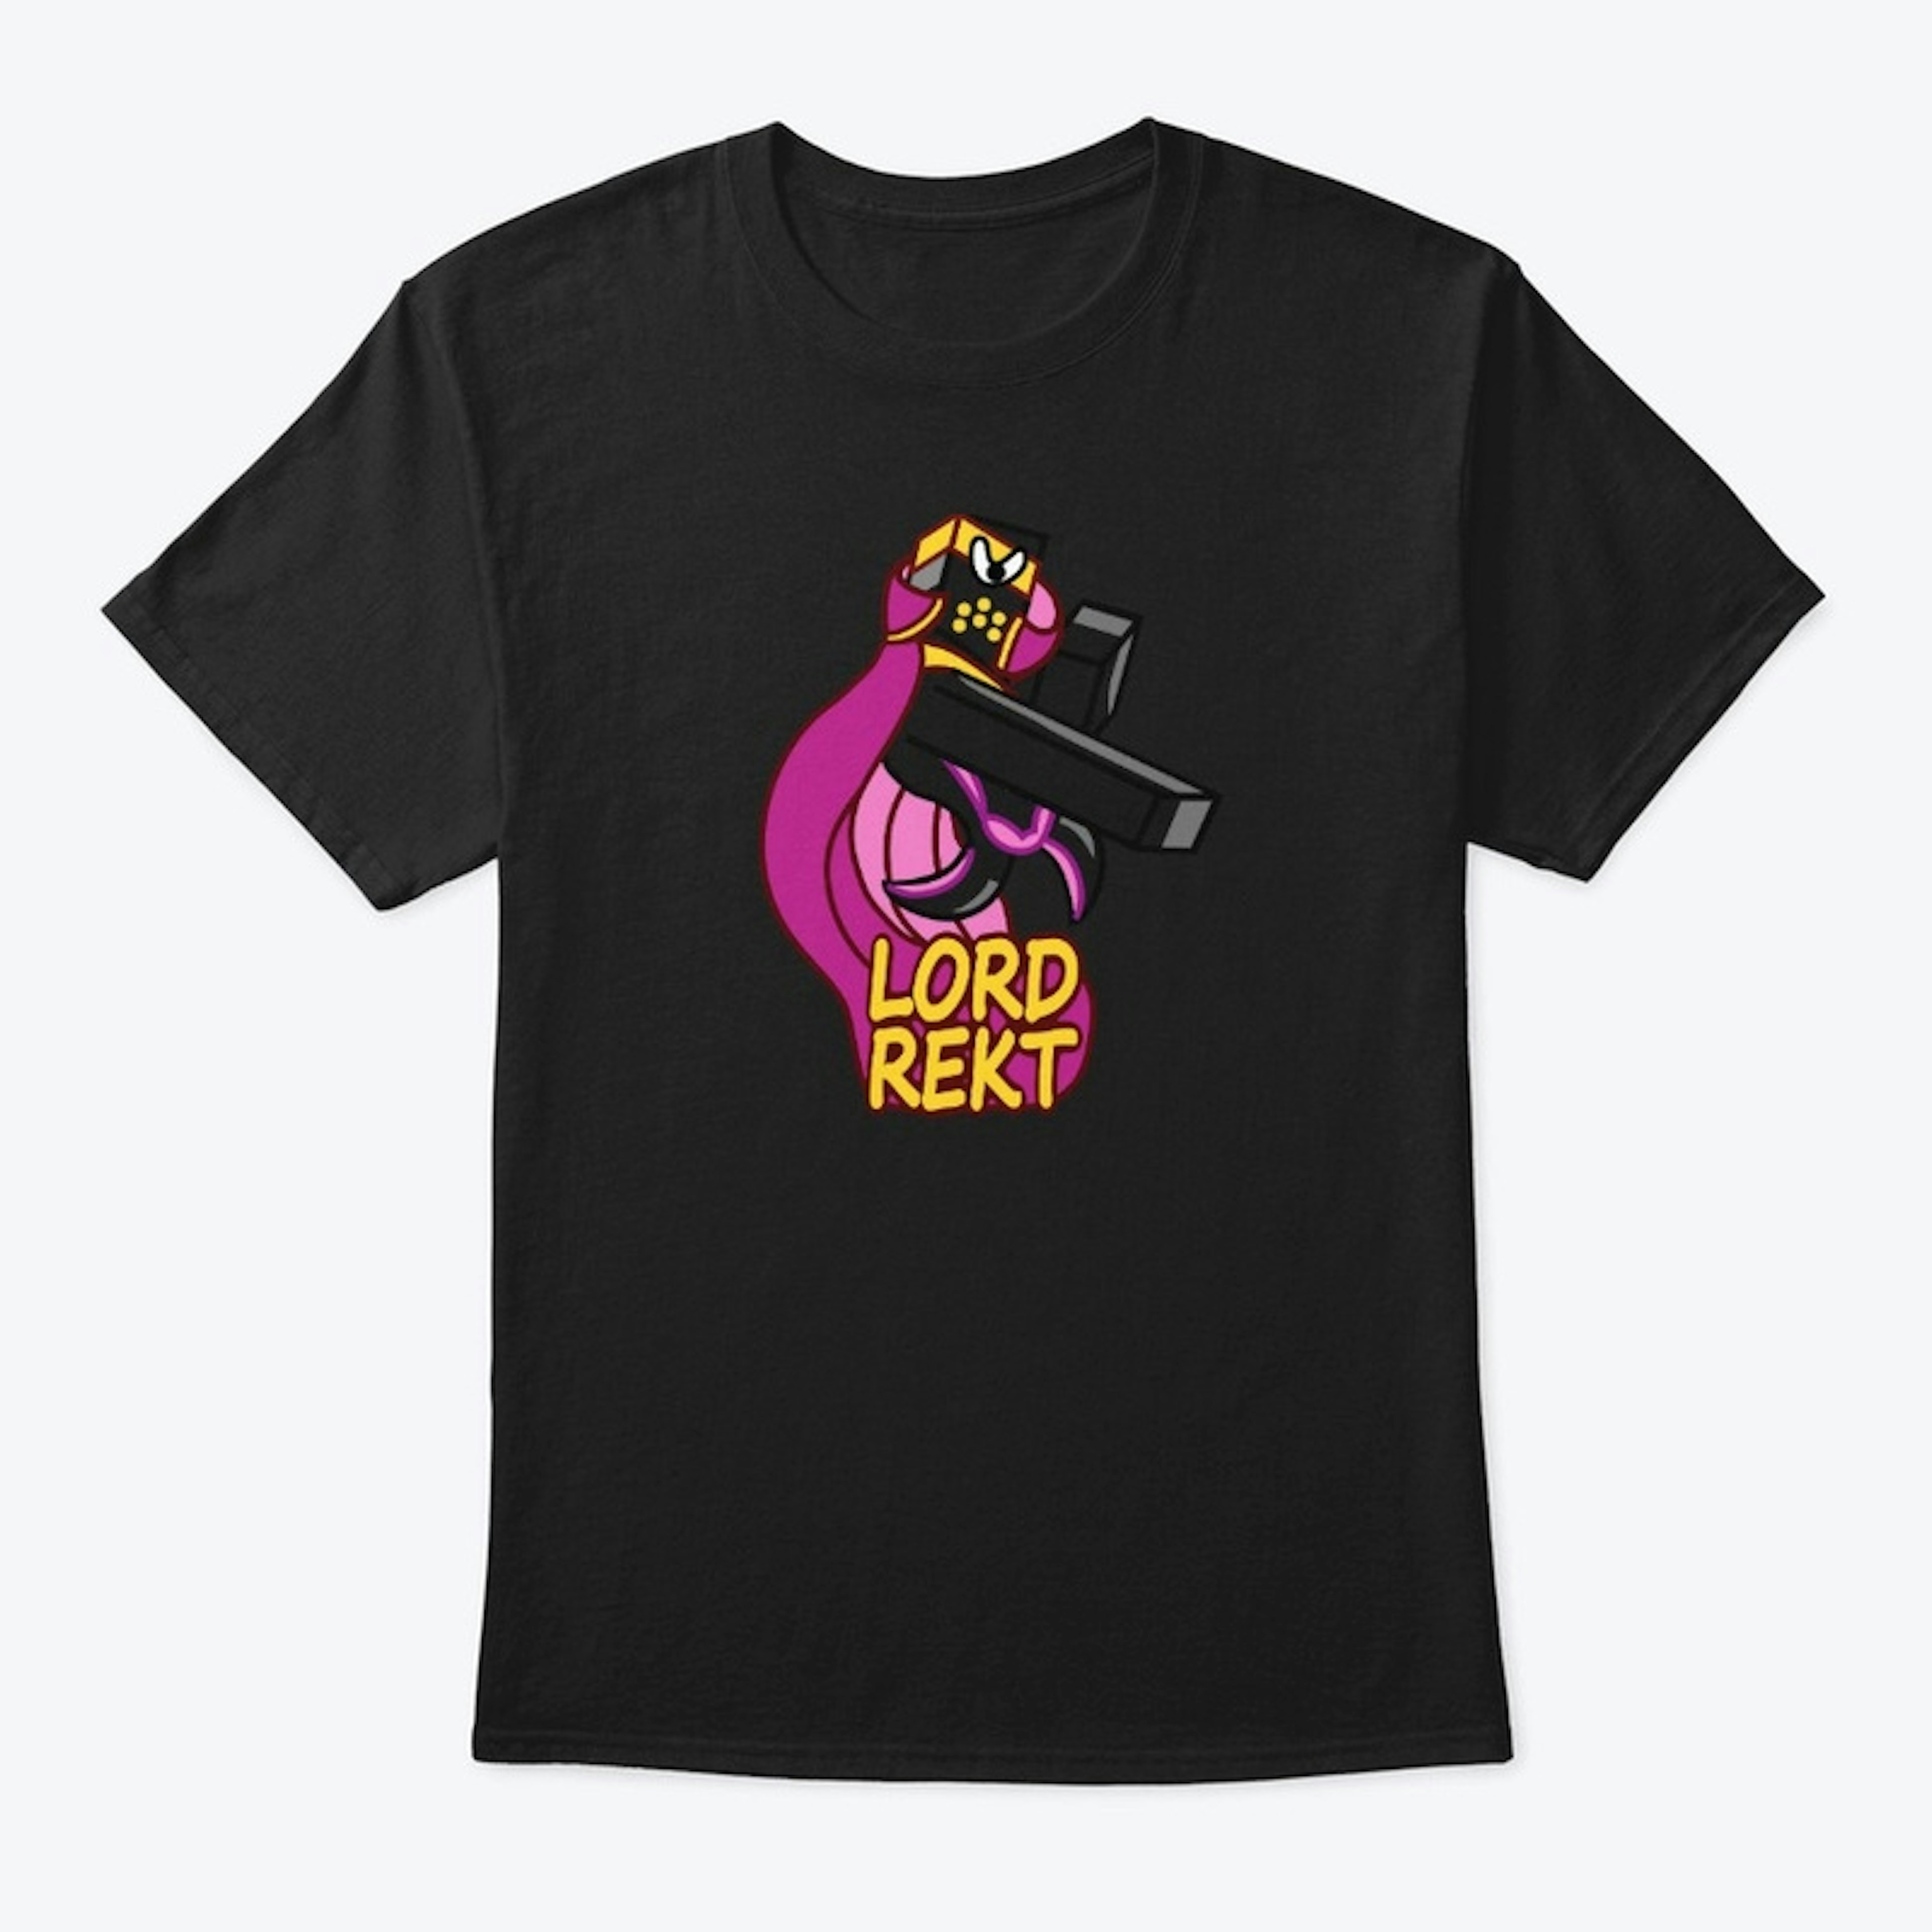 Lord Rekt Shirt + Logo on back